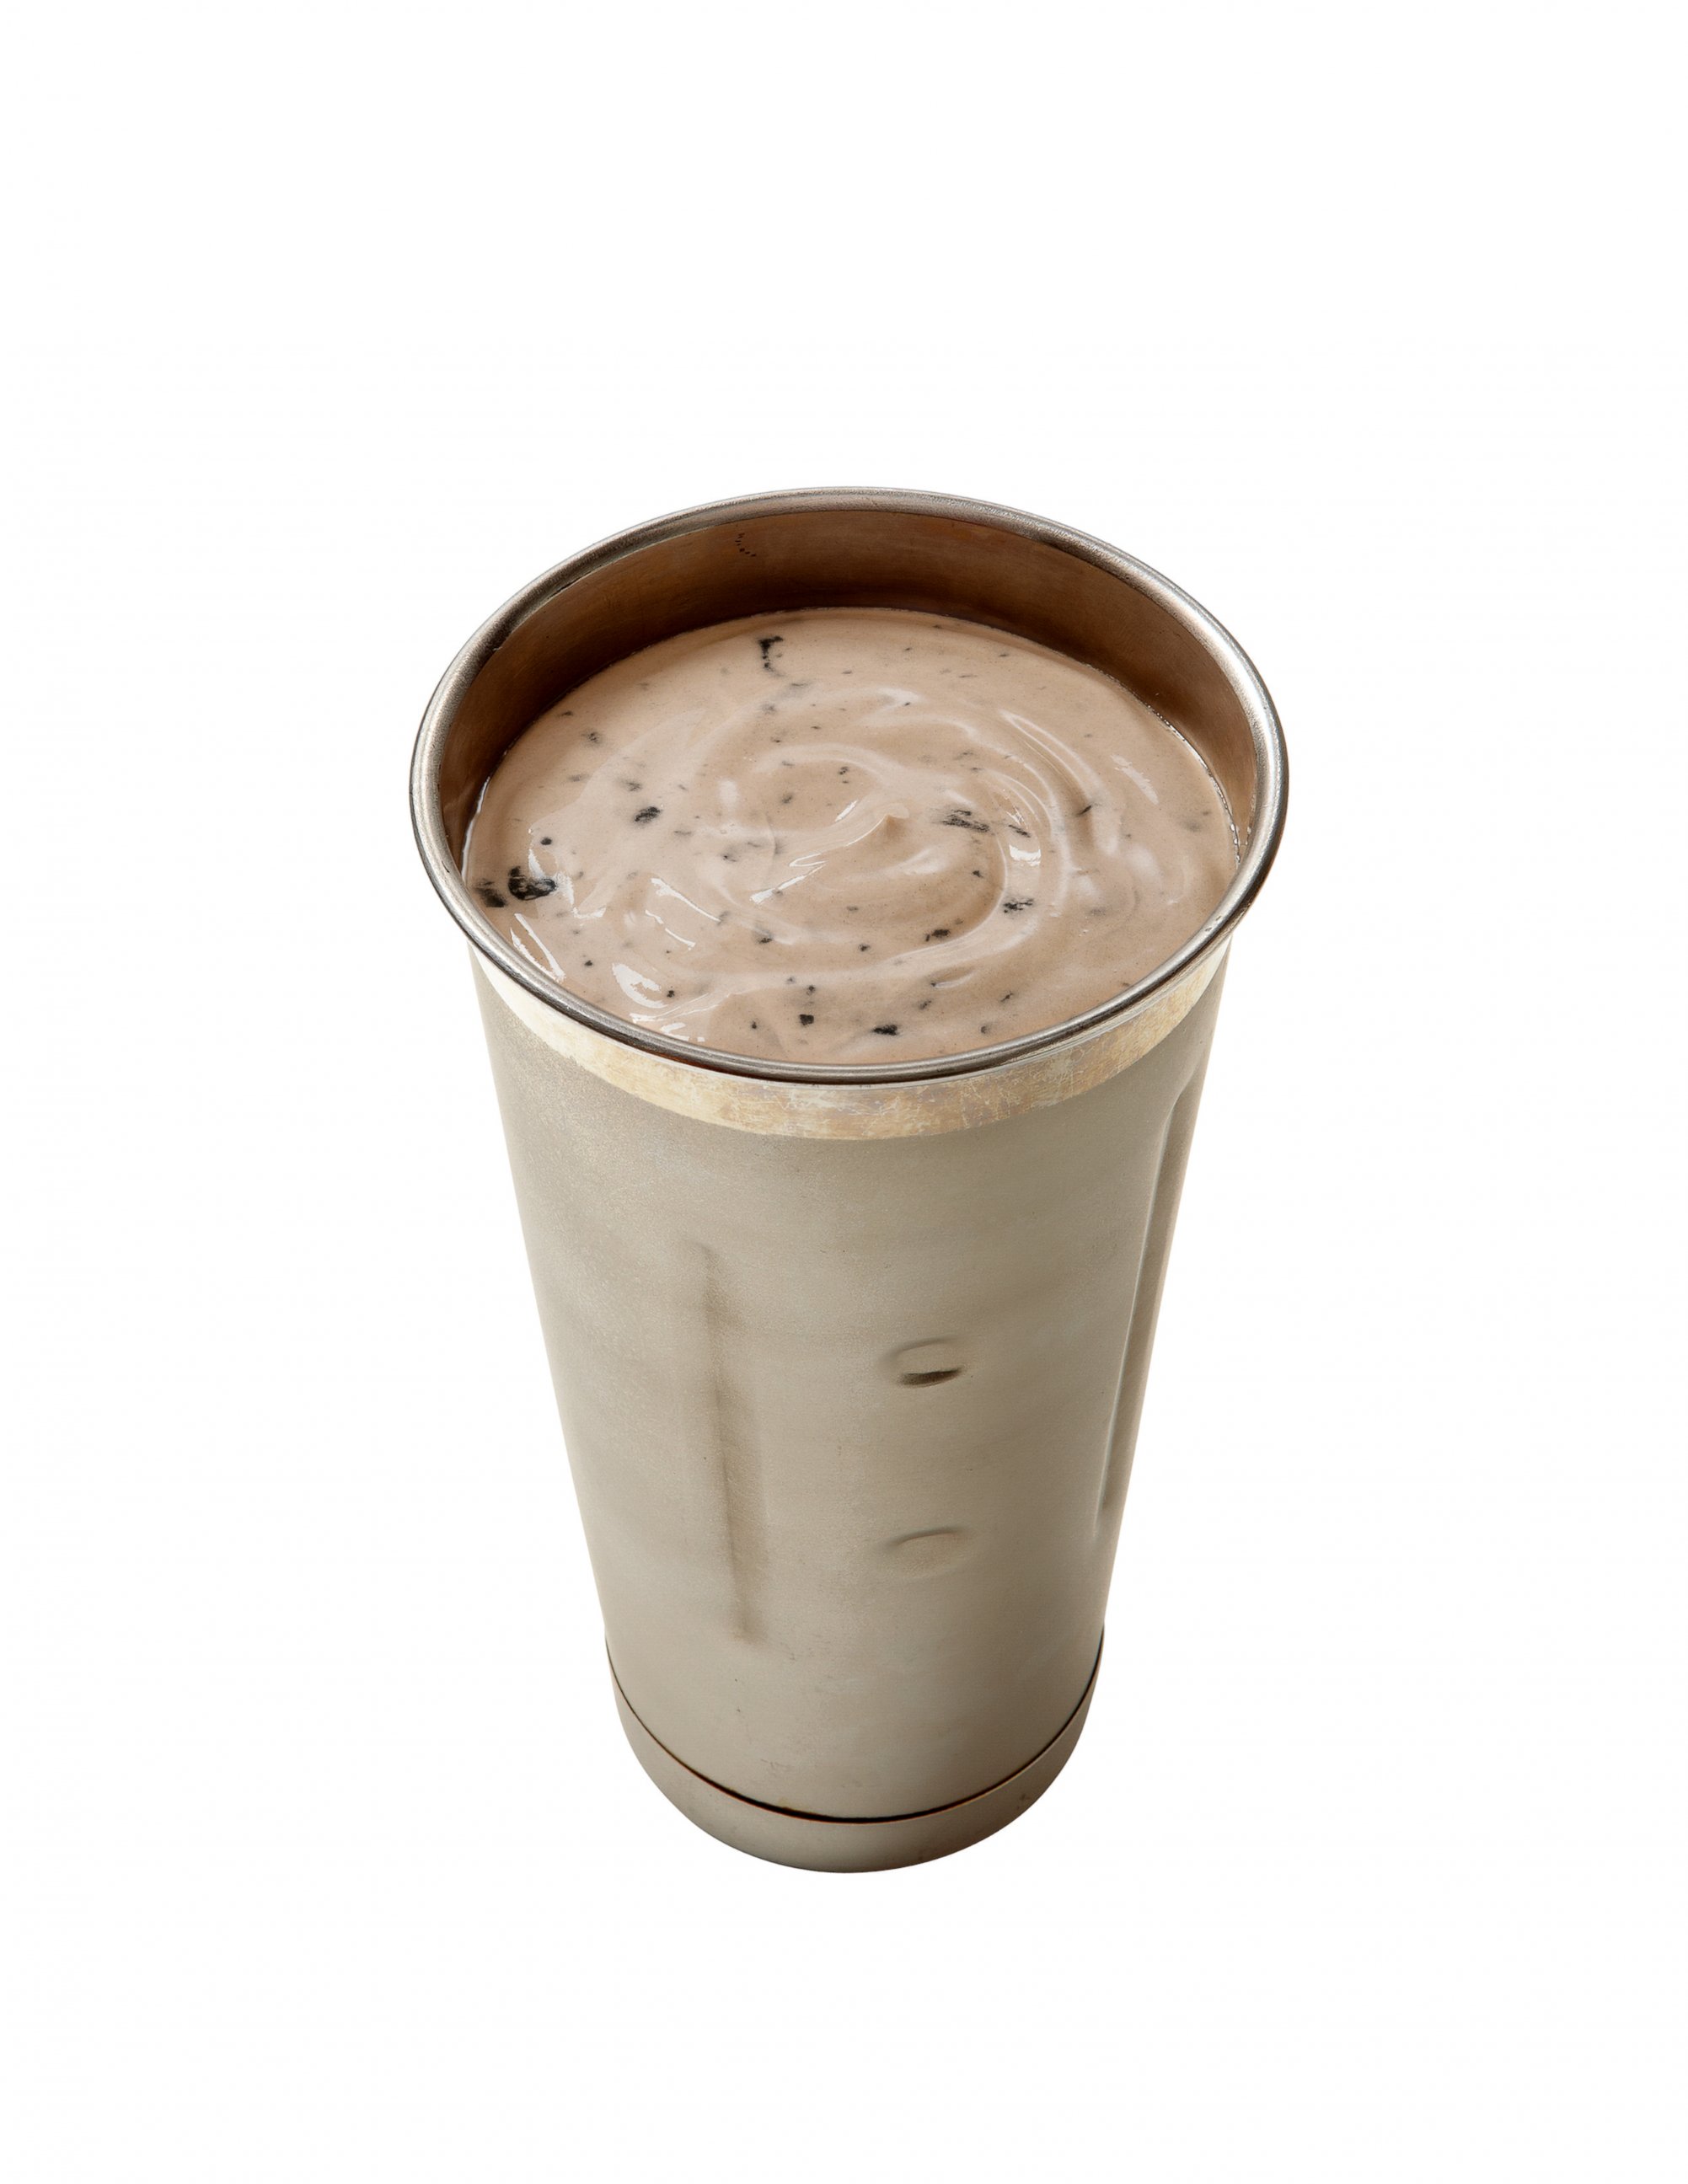 PHOTO: The Oreo Mud Pie cricket protein shake includes Peruvian chocolate-flavored cricket powder. 